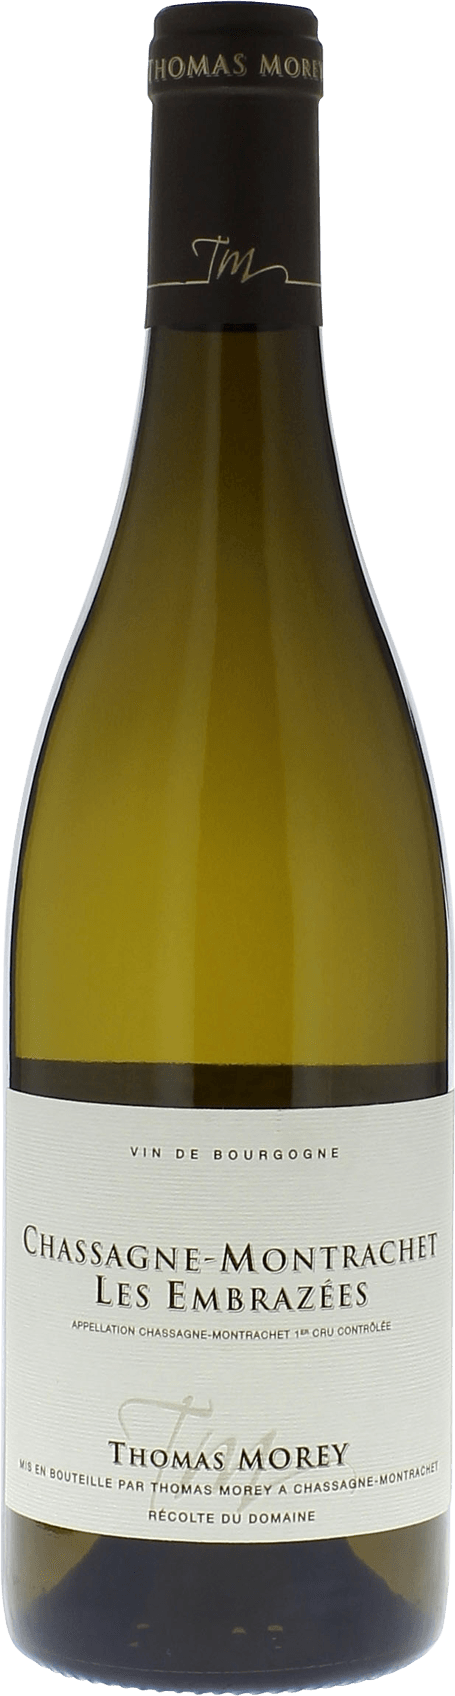 Chassagne montrachet 1er cru embrazes 2015 Domaine MOREY Thomas, Bourgogne blanc